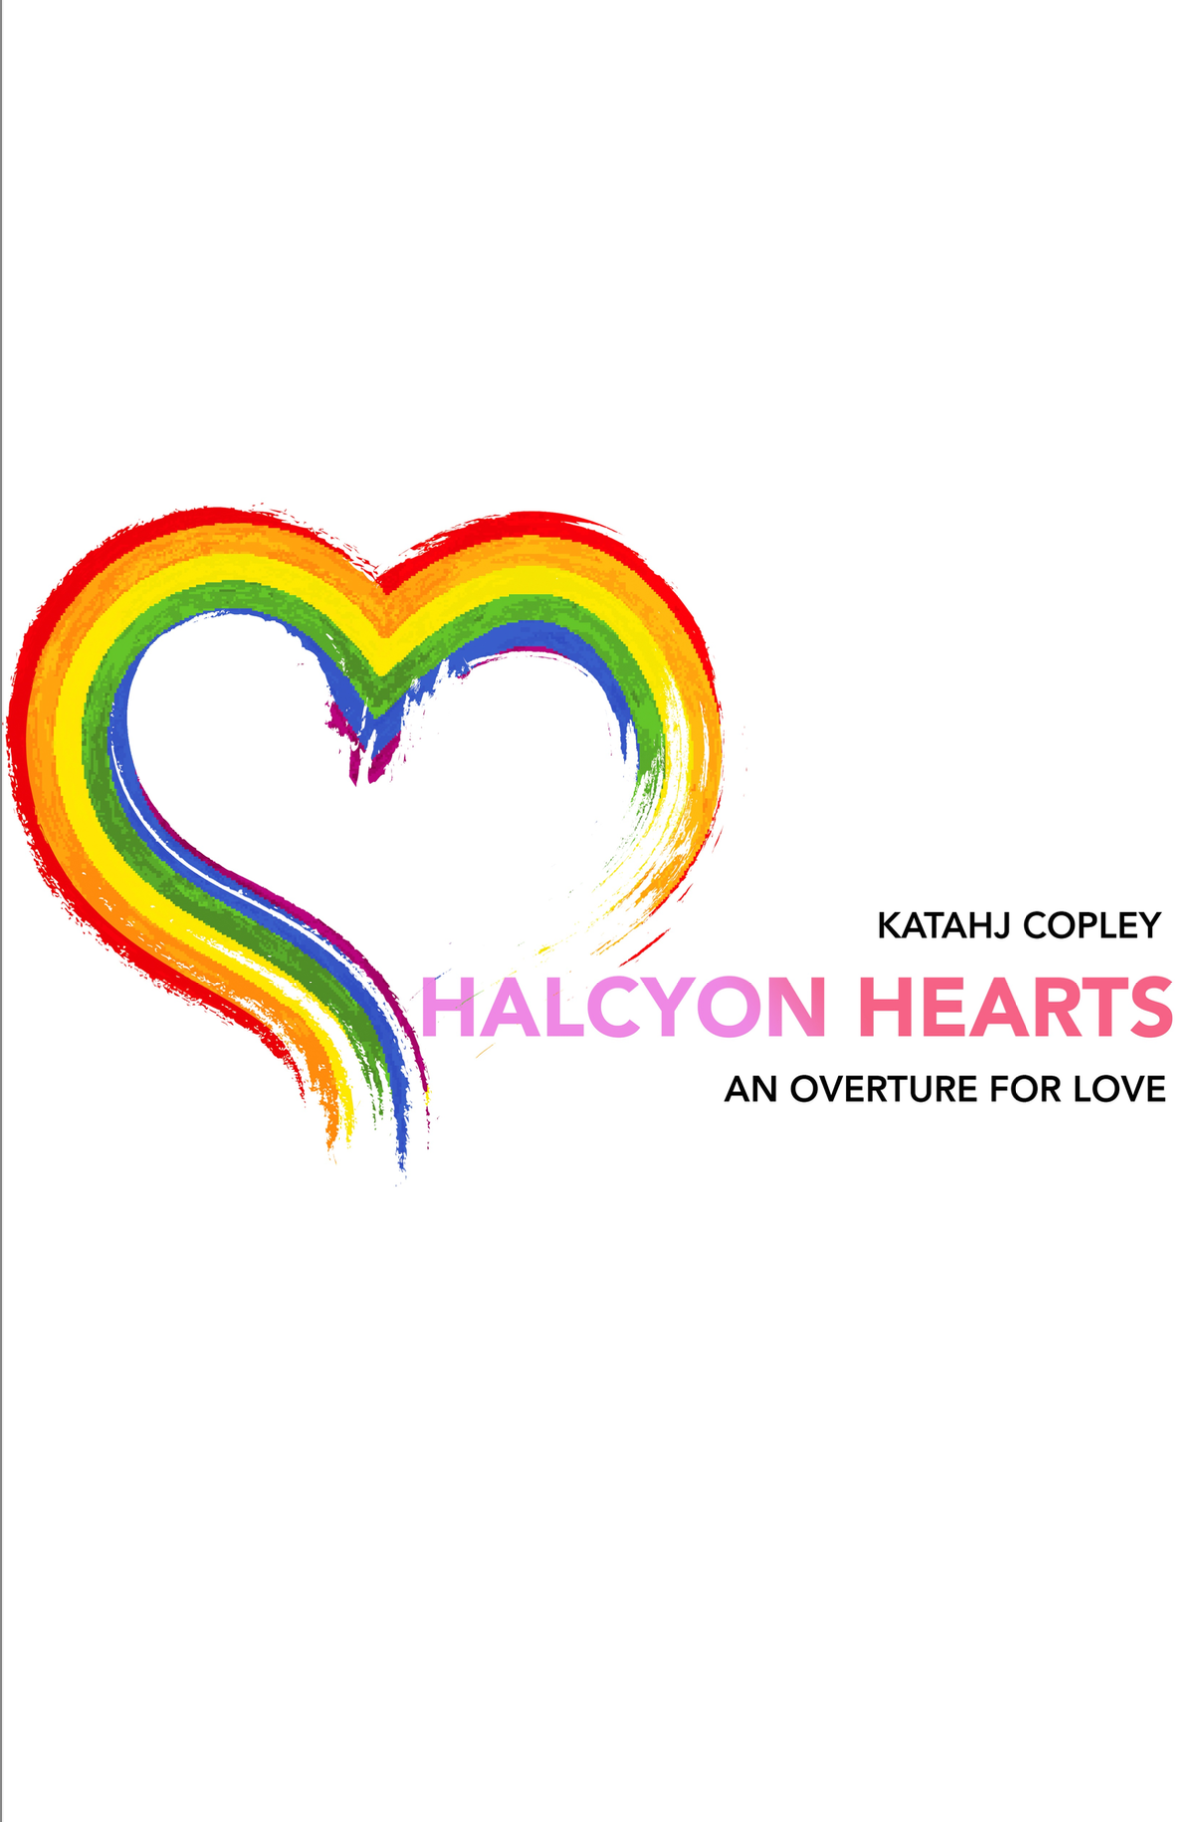 Halcyon Hearts (Score Only) by Katahj Copley